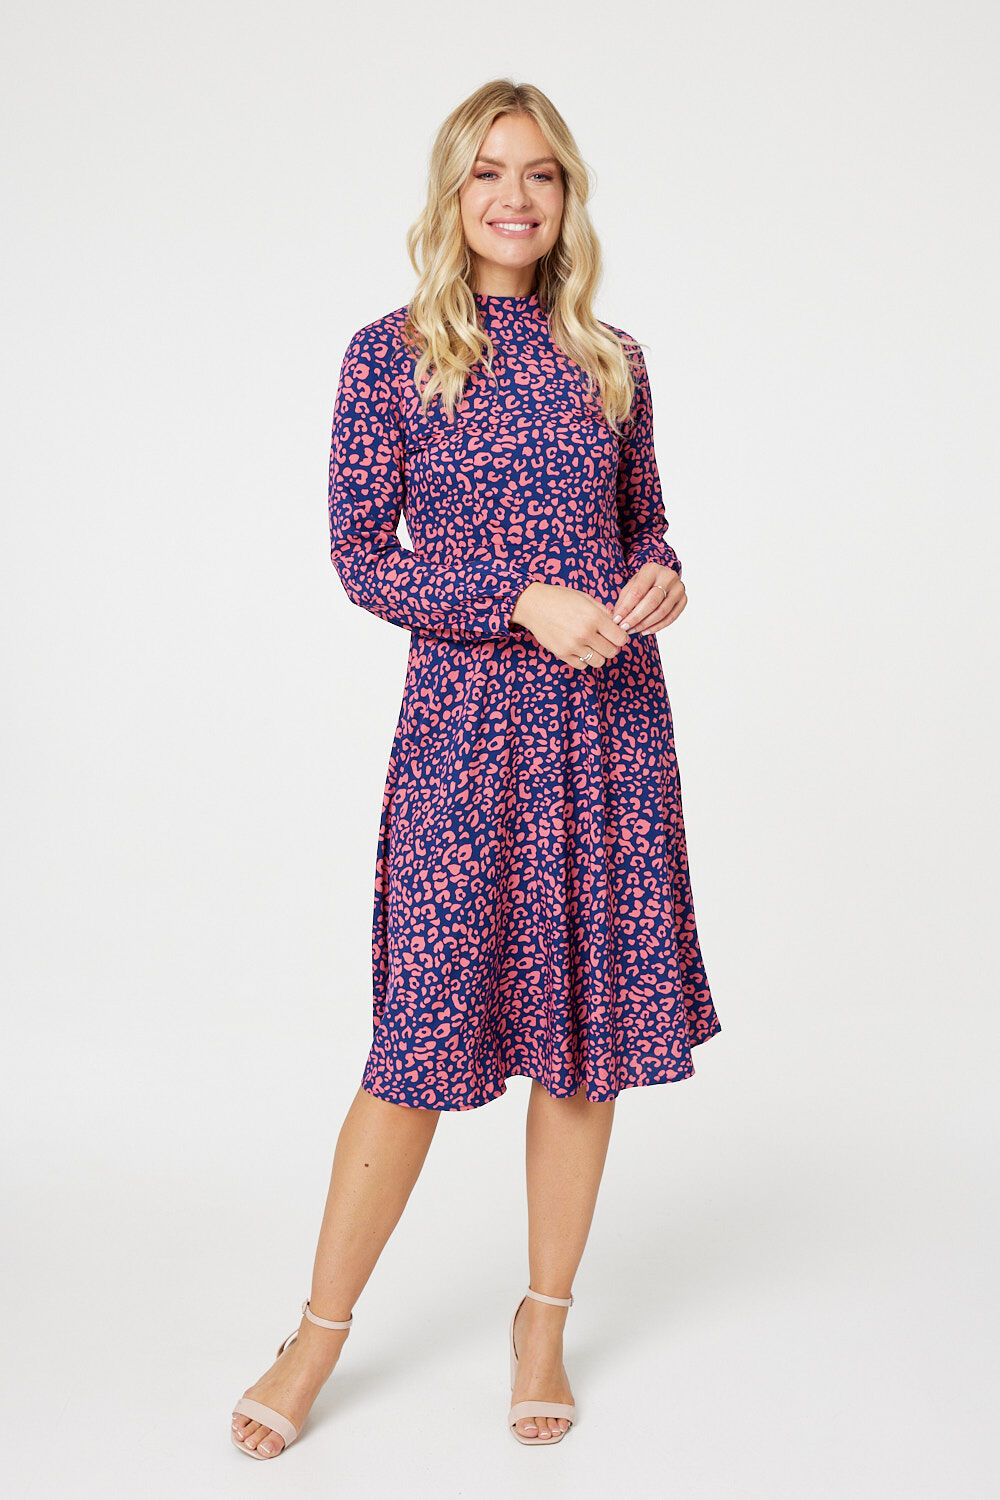 Izabel London Women’s Blue Leopard Print Stylish High Neck Tea Dress, Size: 16